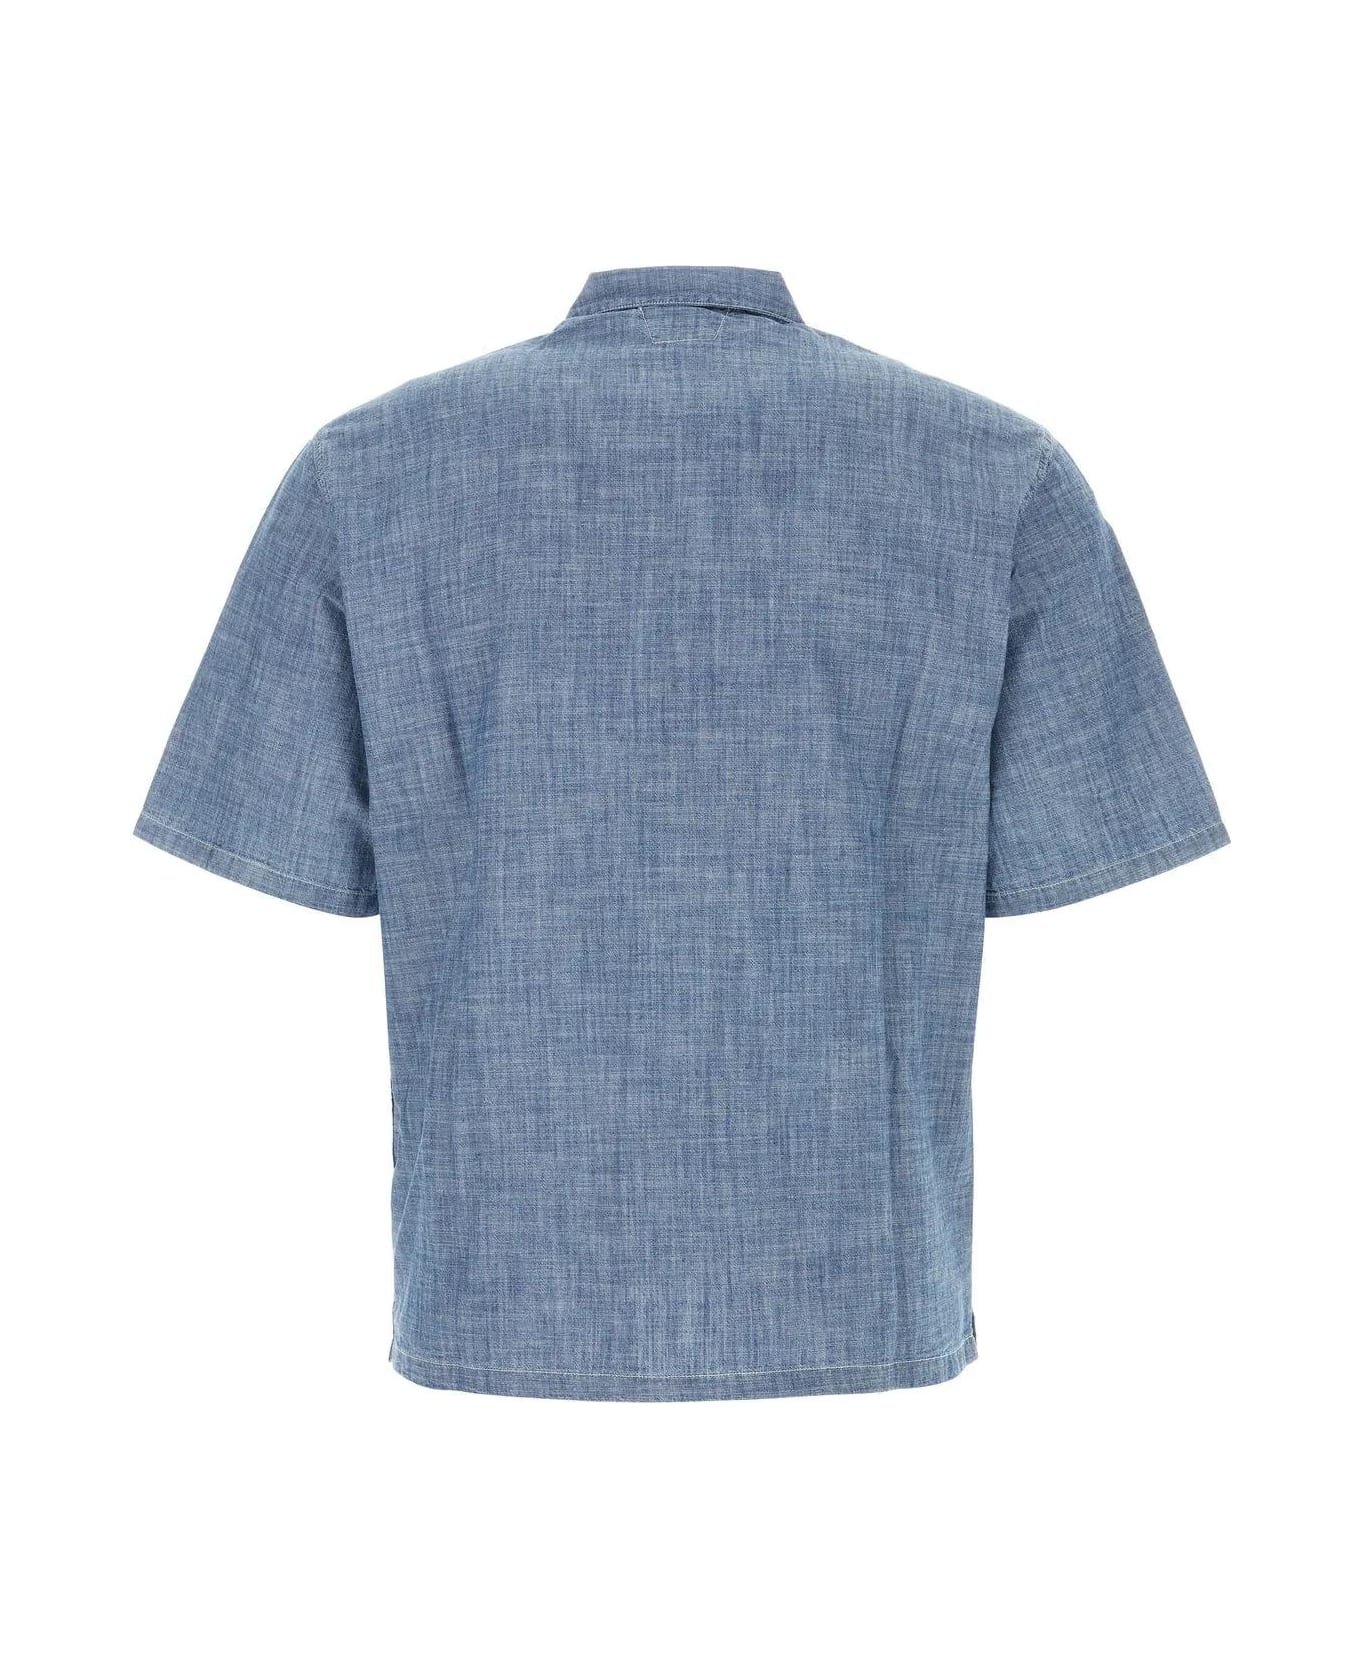 C.P. Company Denim Shirt - Blu Denim